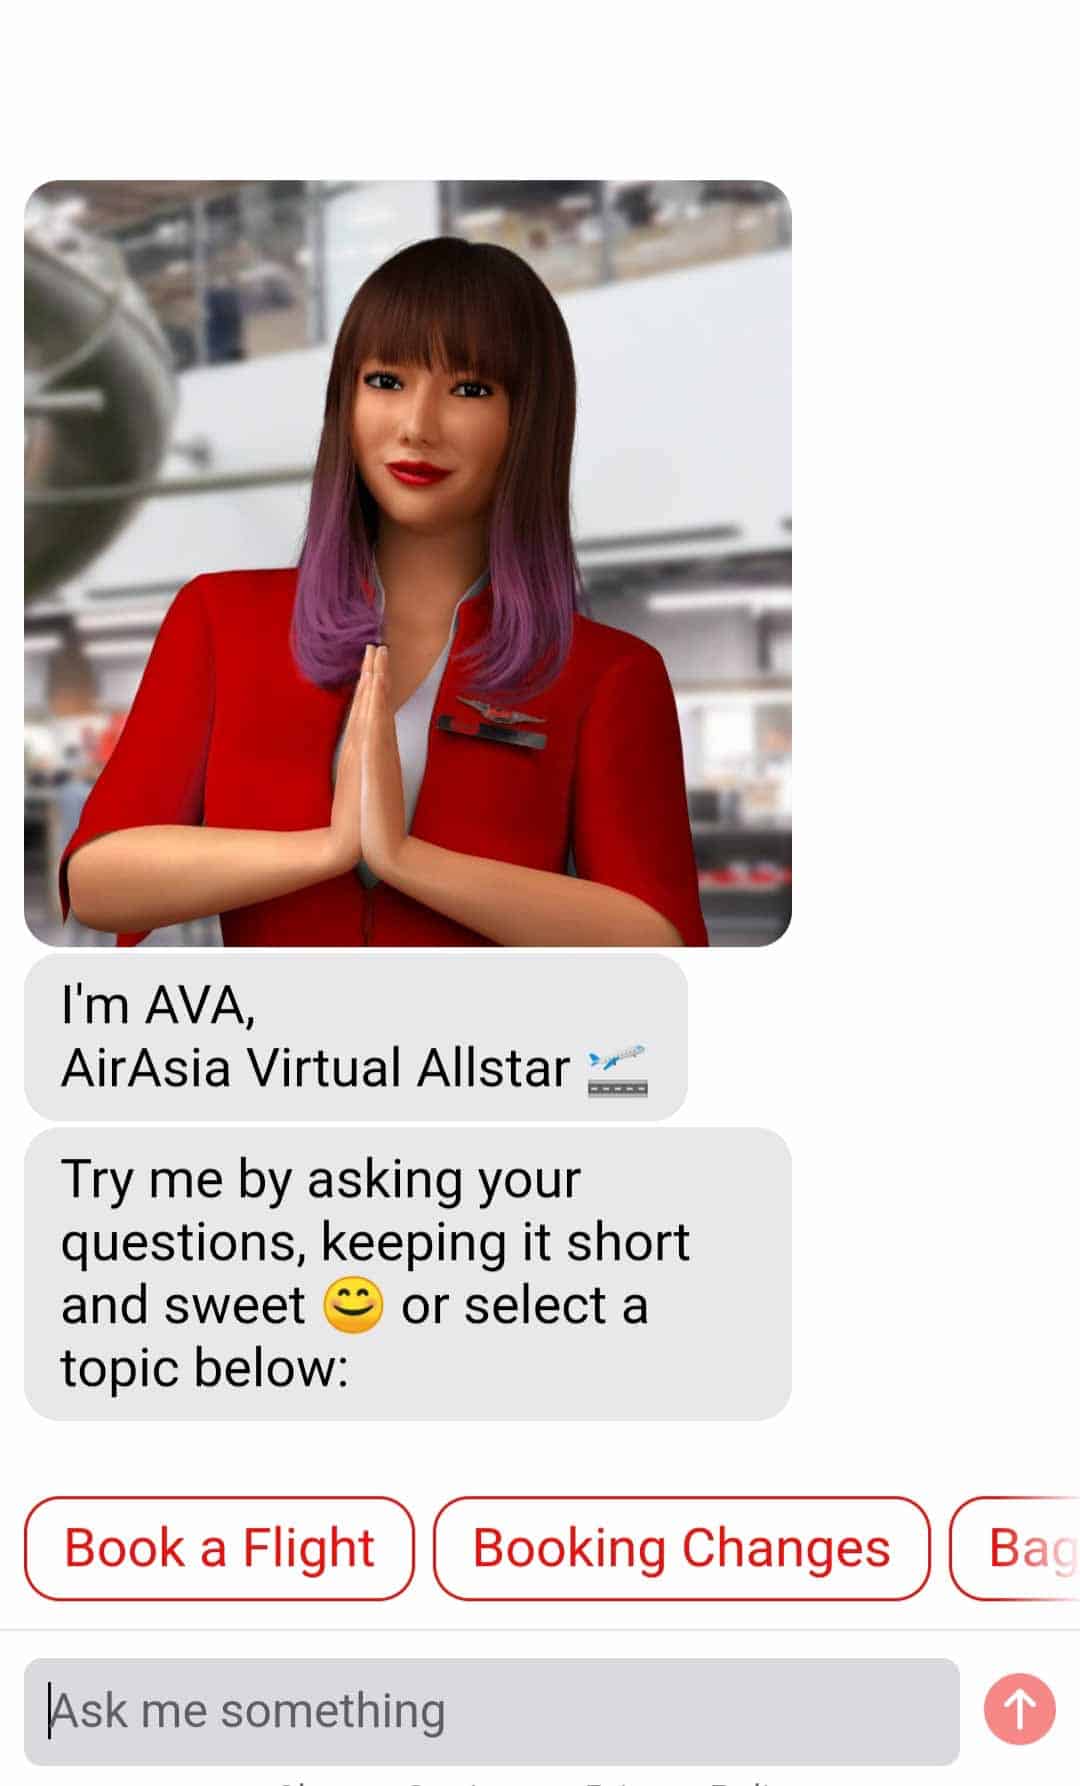 AVA, Airasia's virtual assistant bot